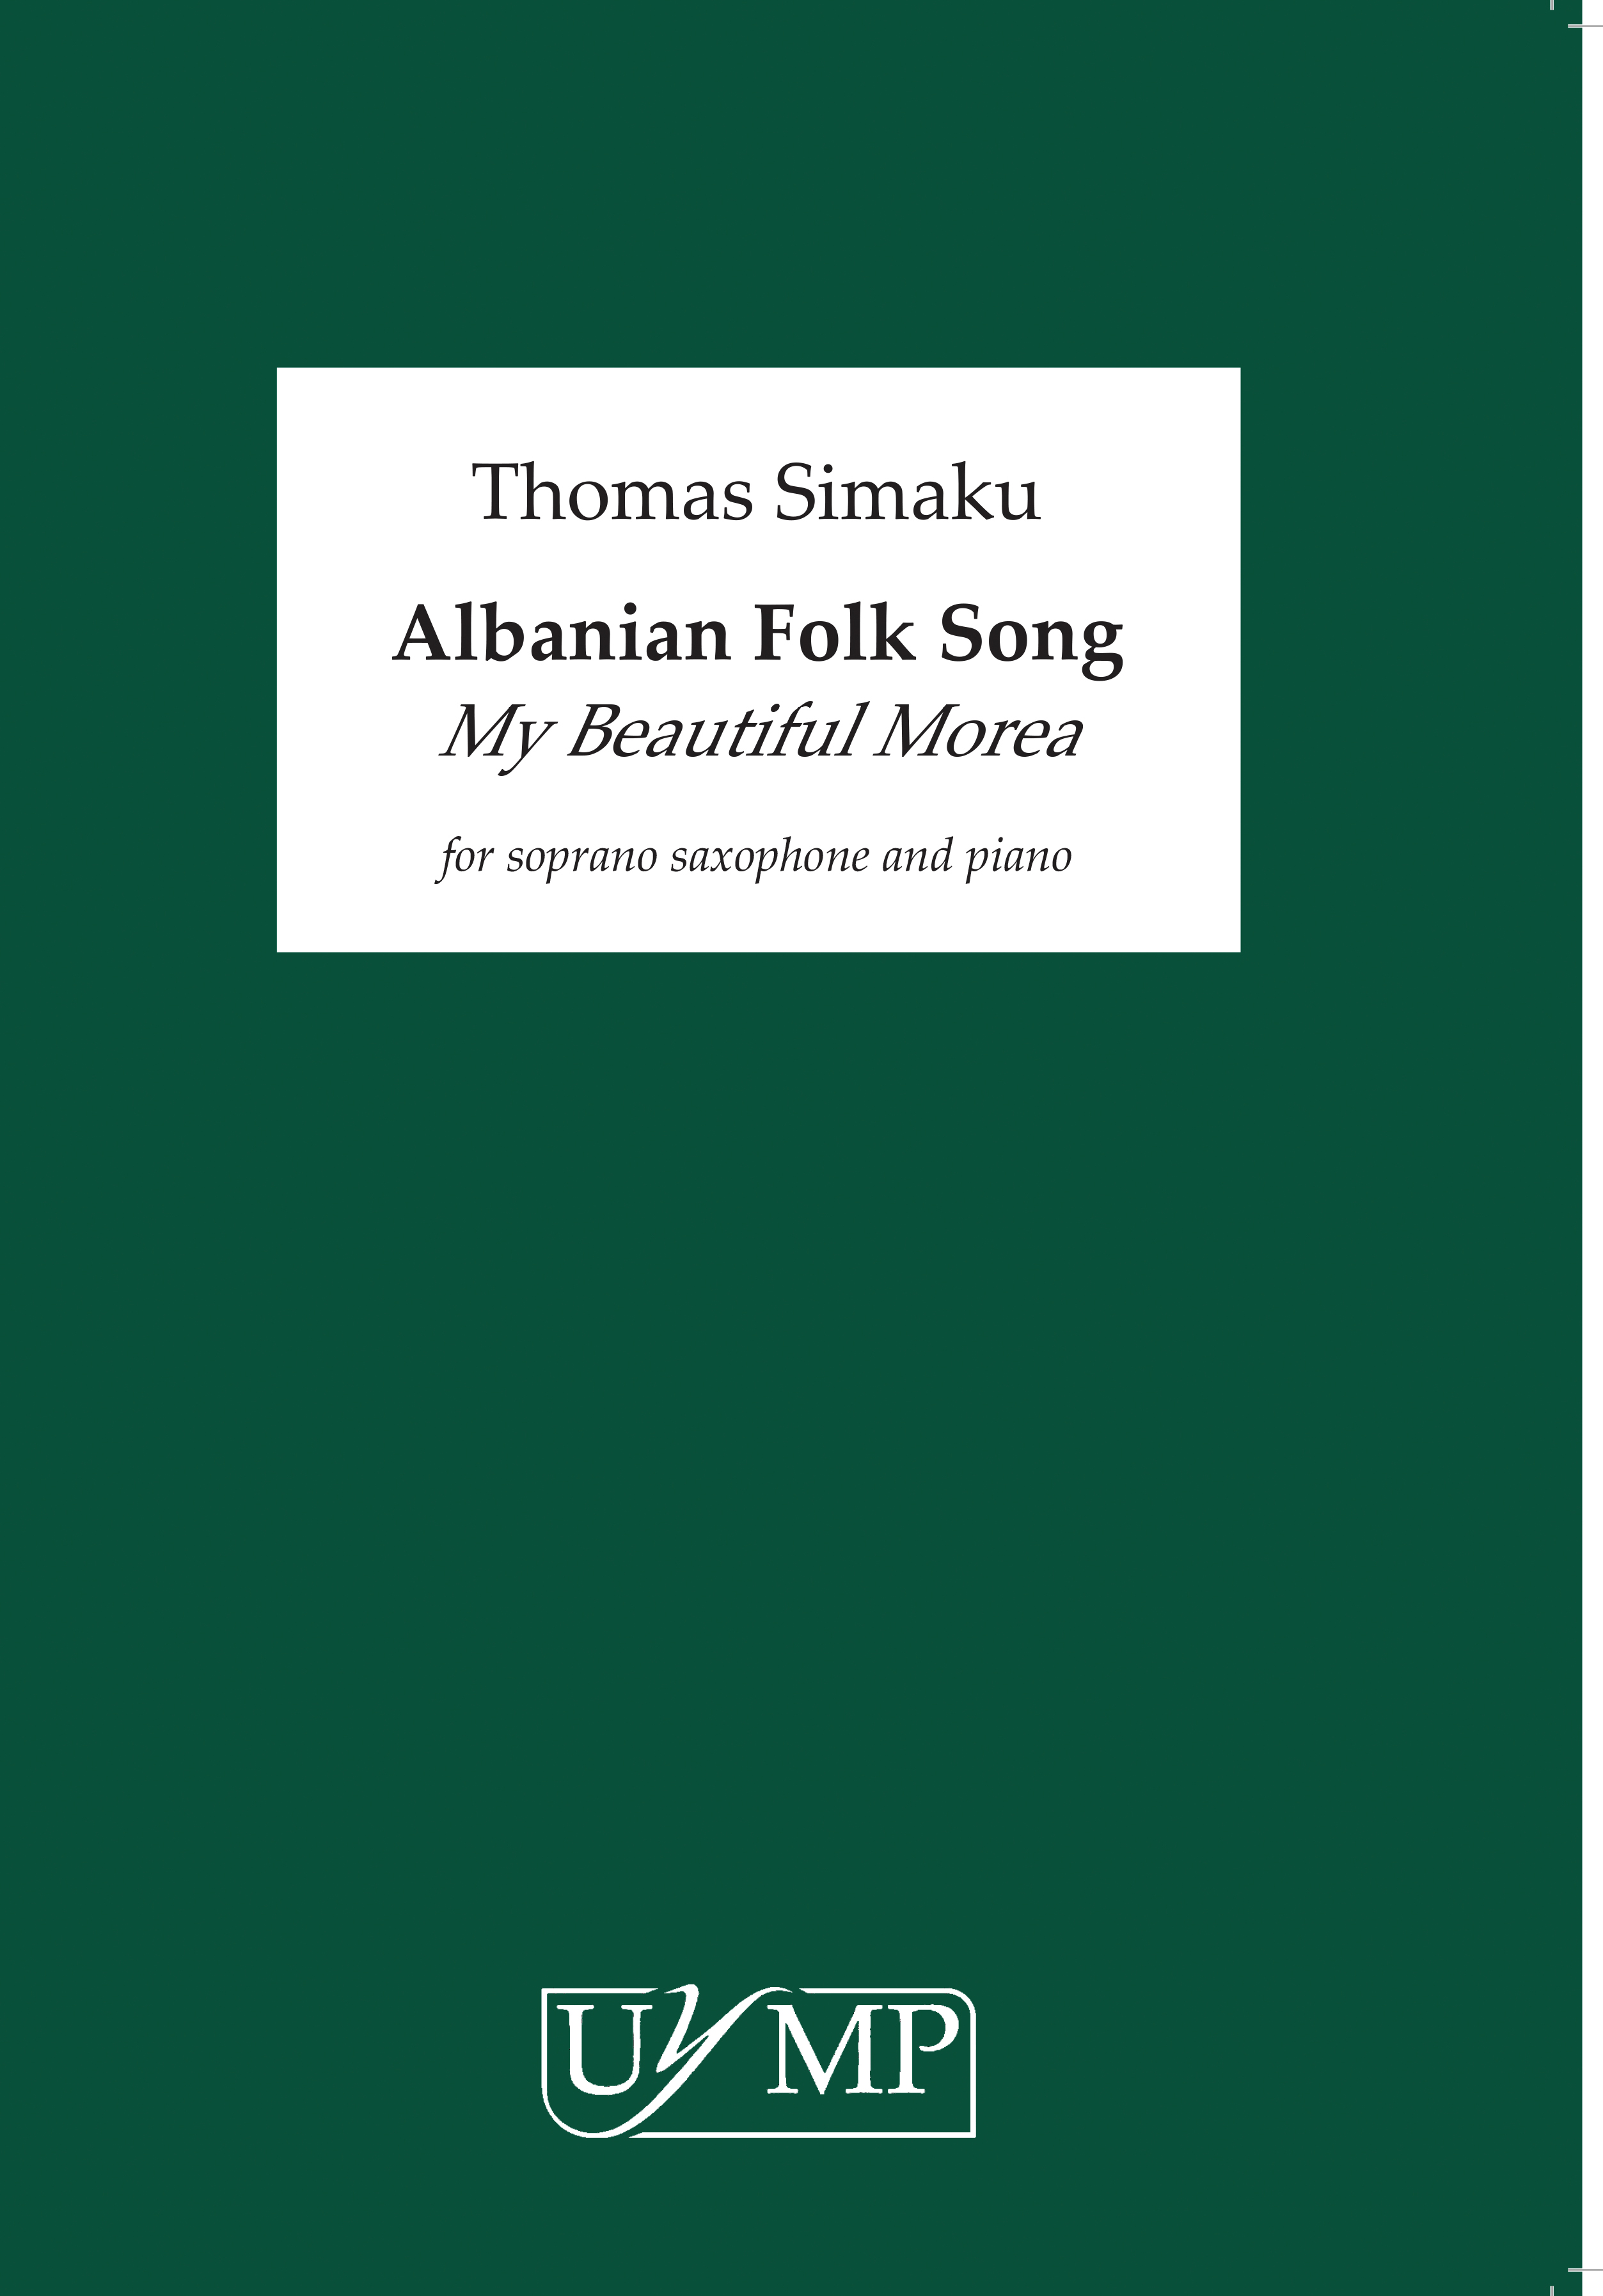 Thomas Simaku: Albanian Folk Song 